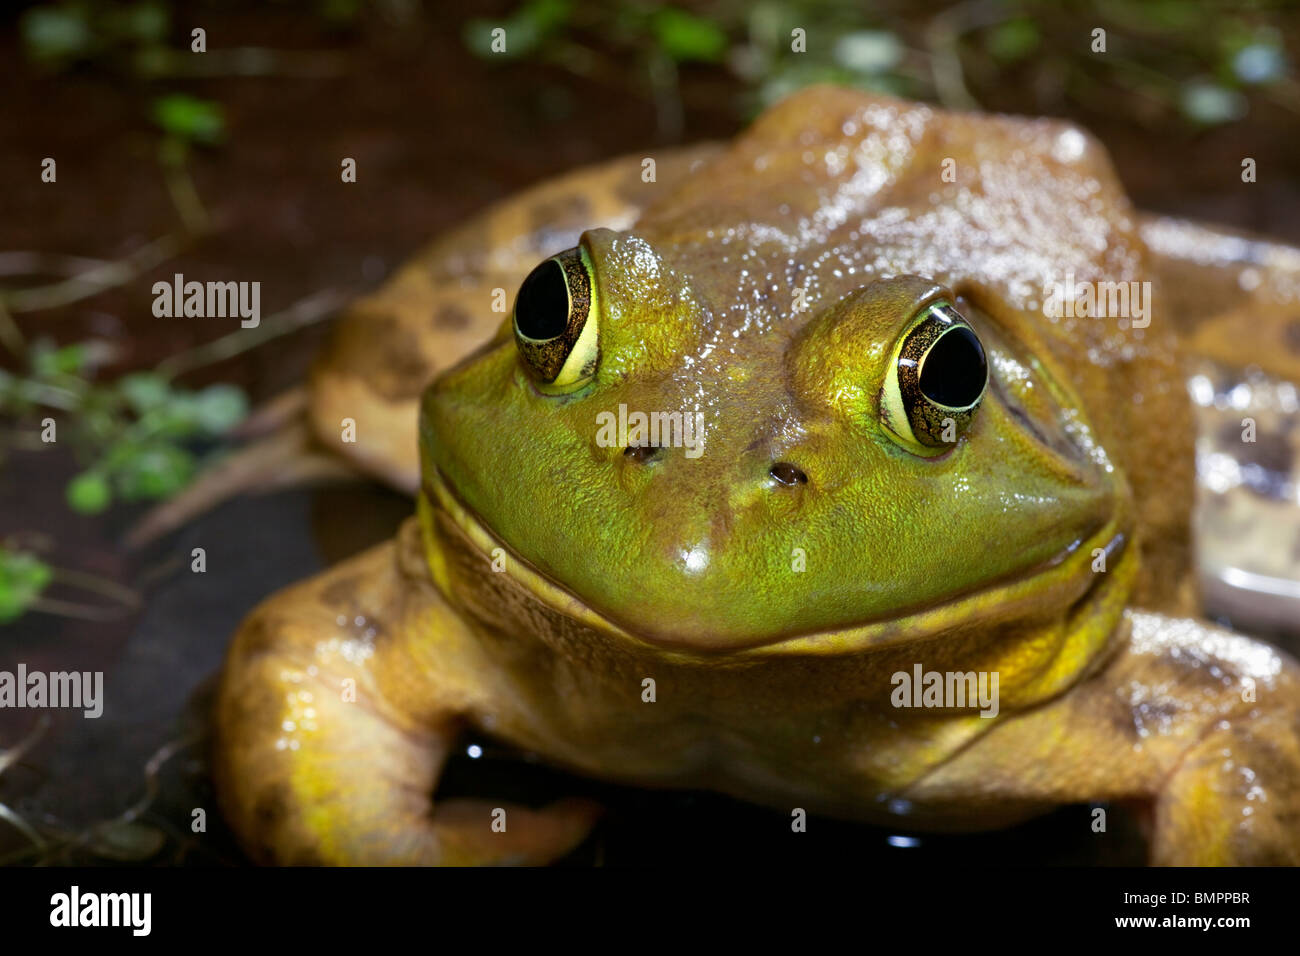 The American Bullfrog (Rana catesbeiana), often simply known as the Bullfrog. Stock Photo